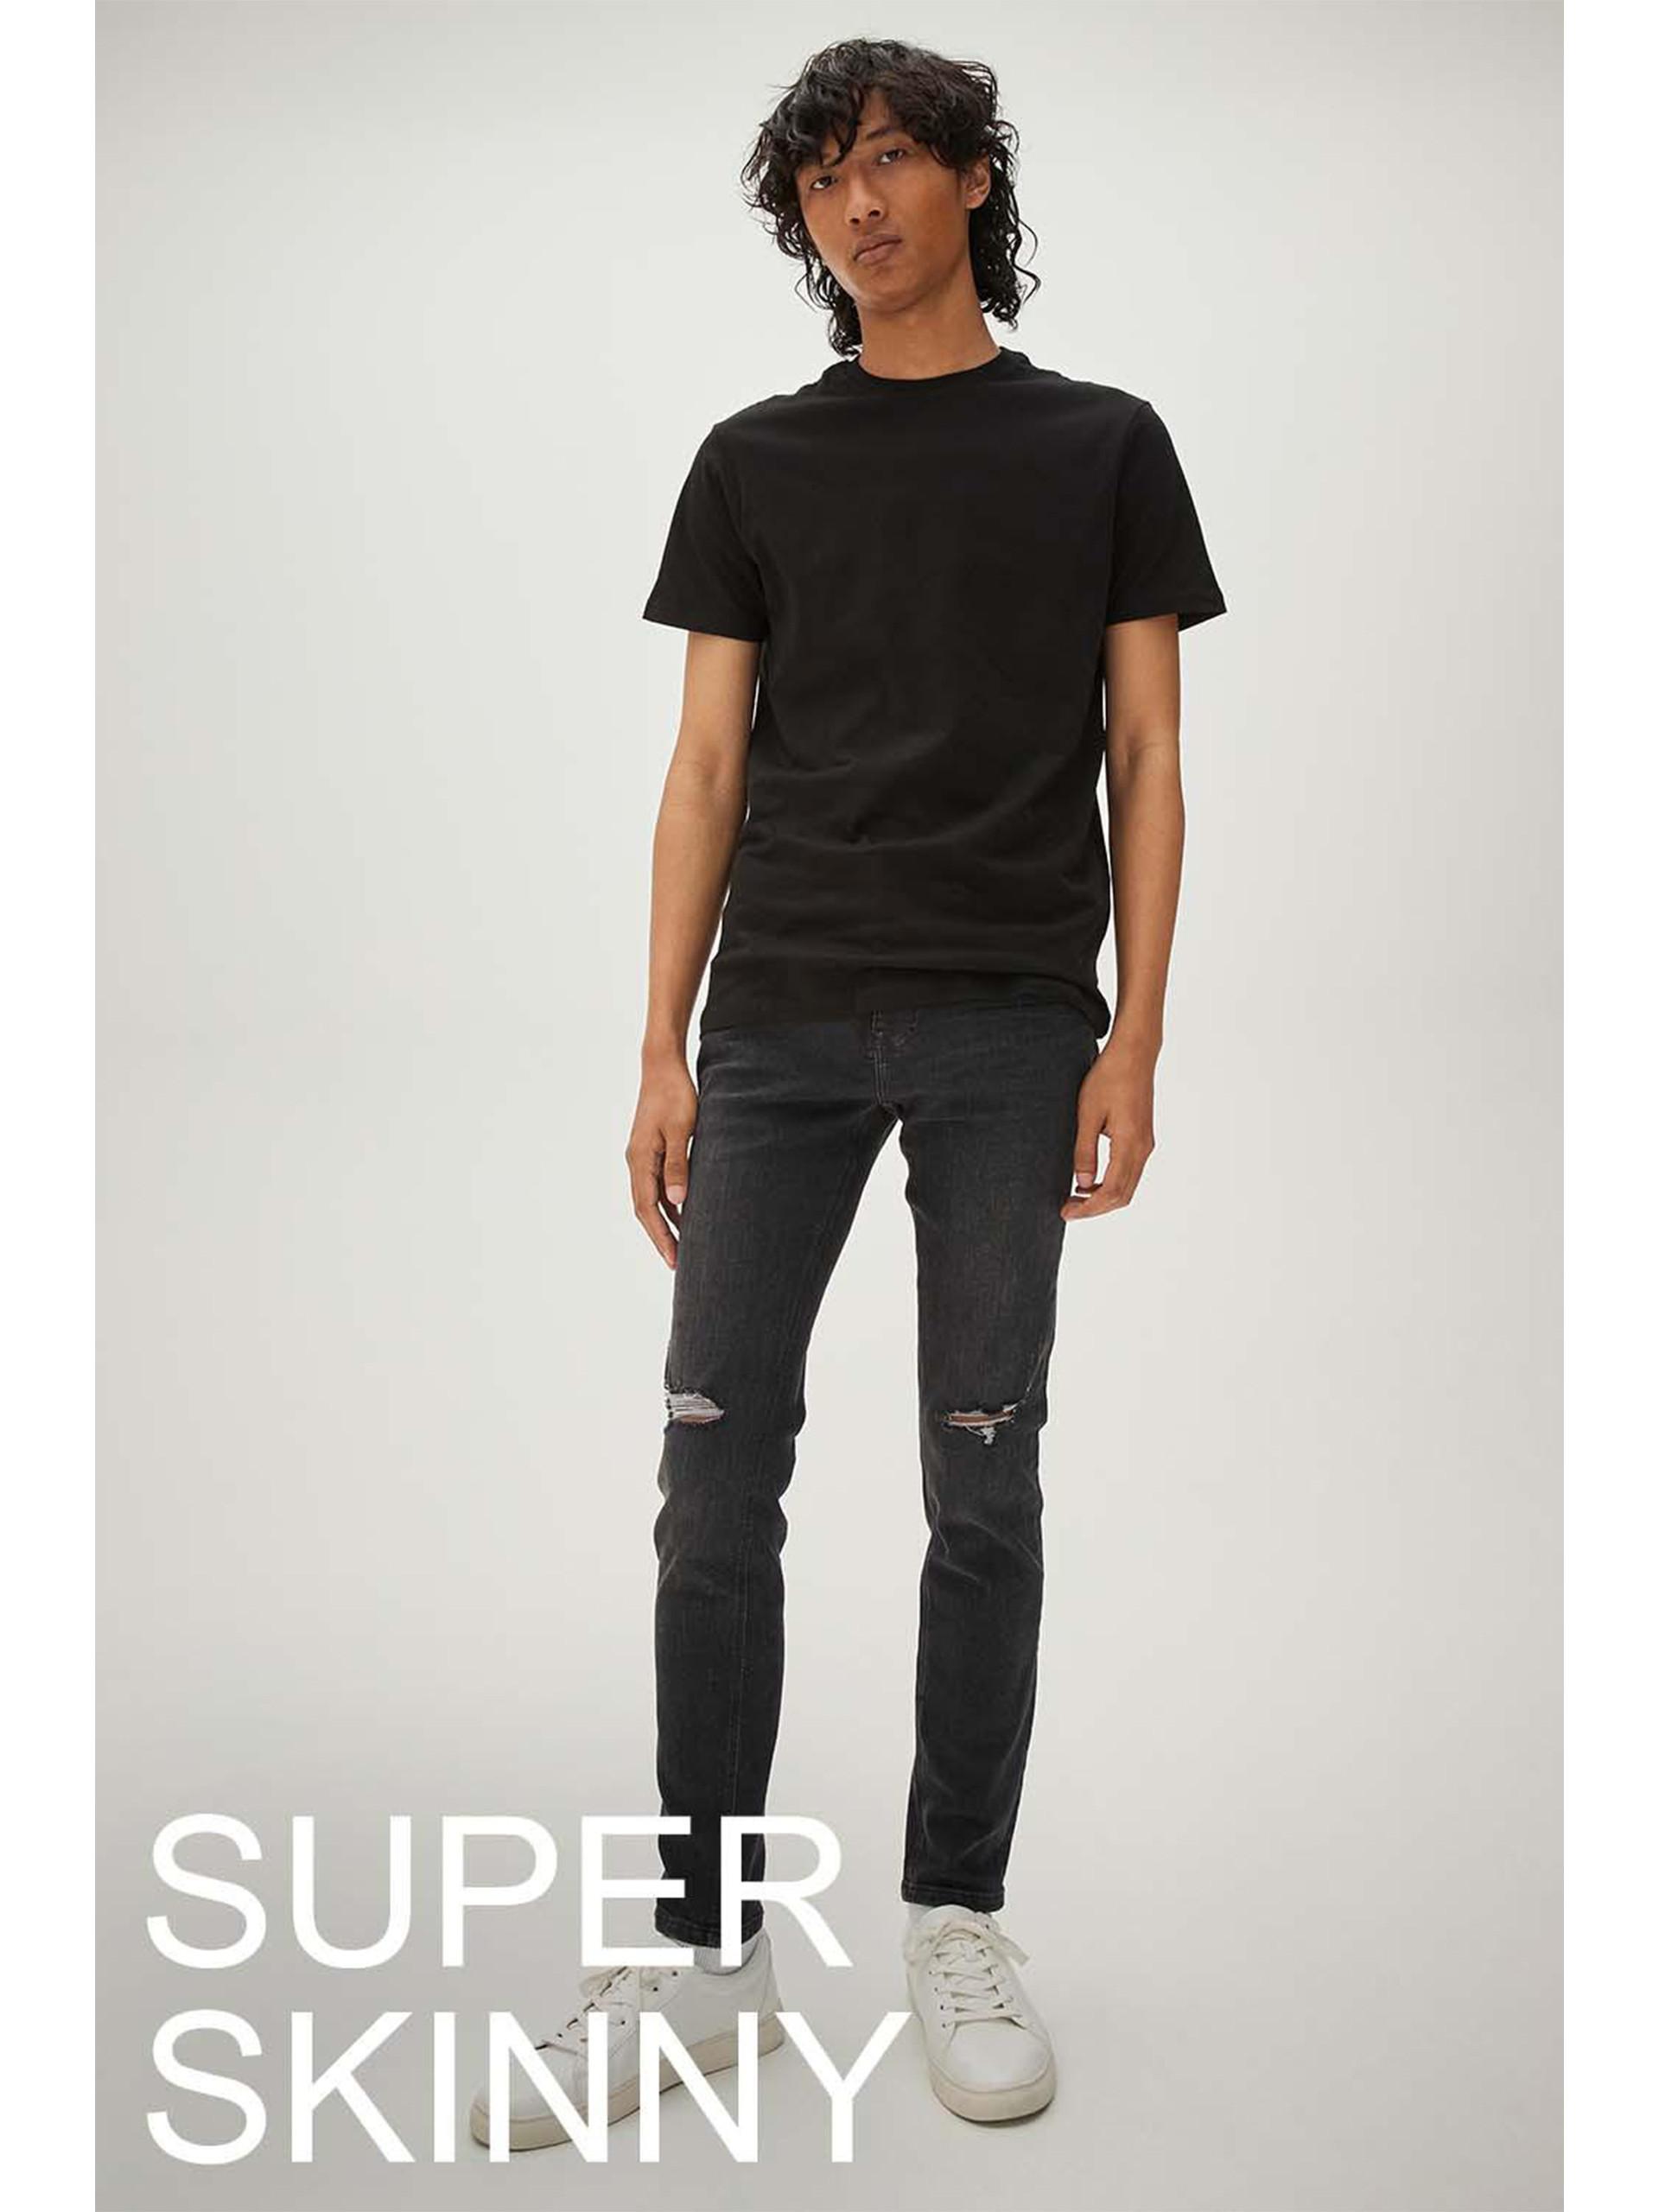 Model trägt schwarze Super Skinny Jeans mit Cuts am Knie